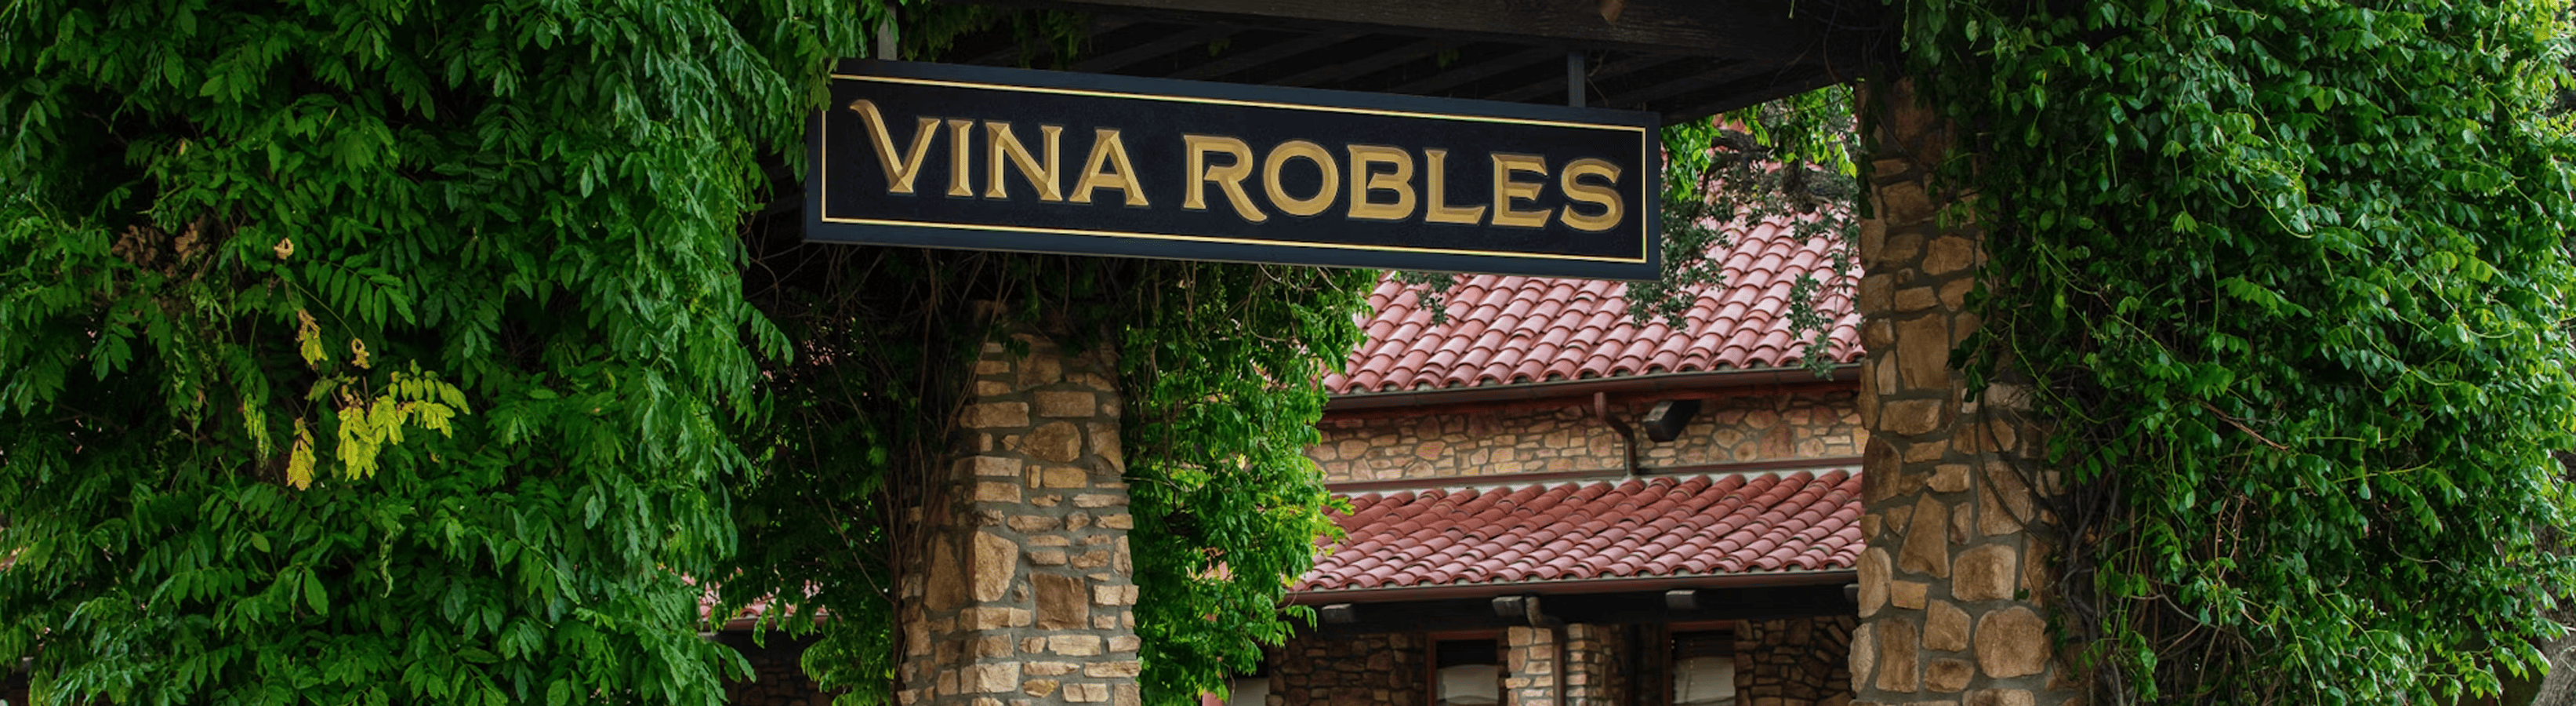 vina robles vineyards & winery